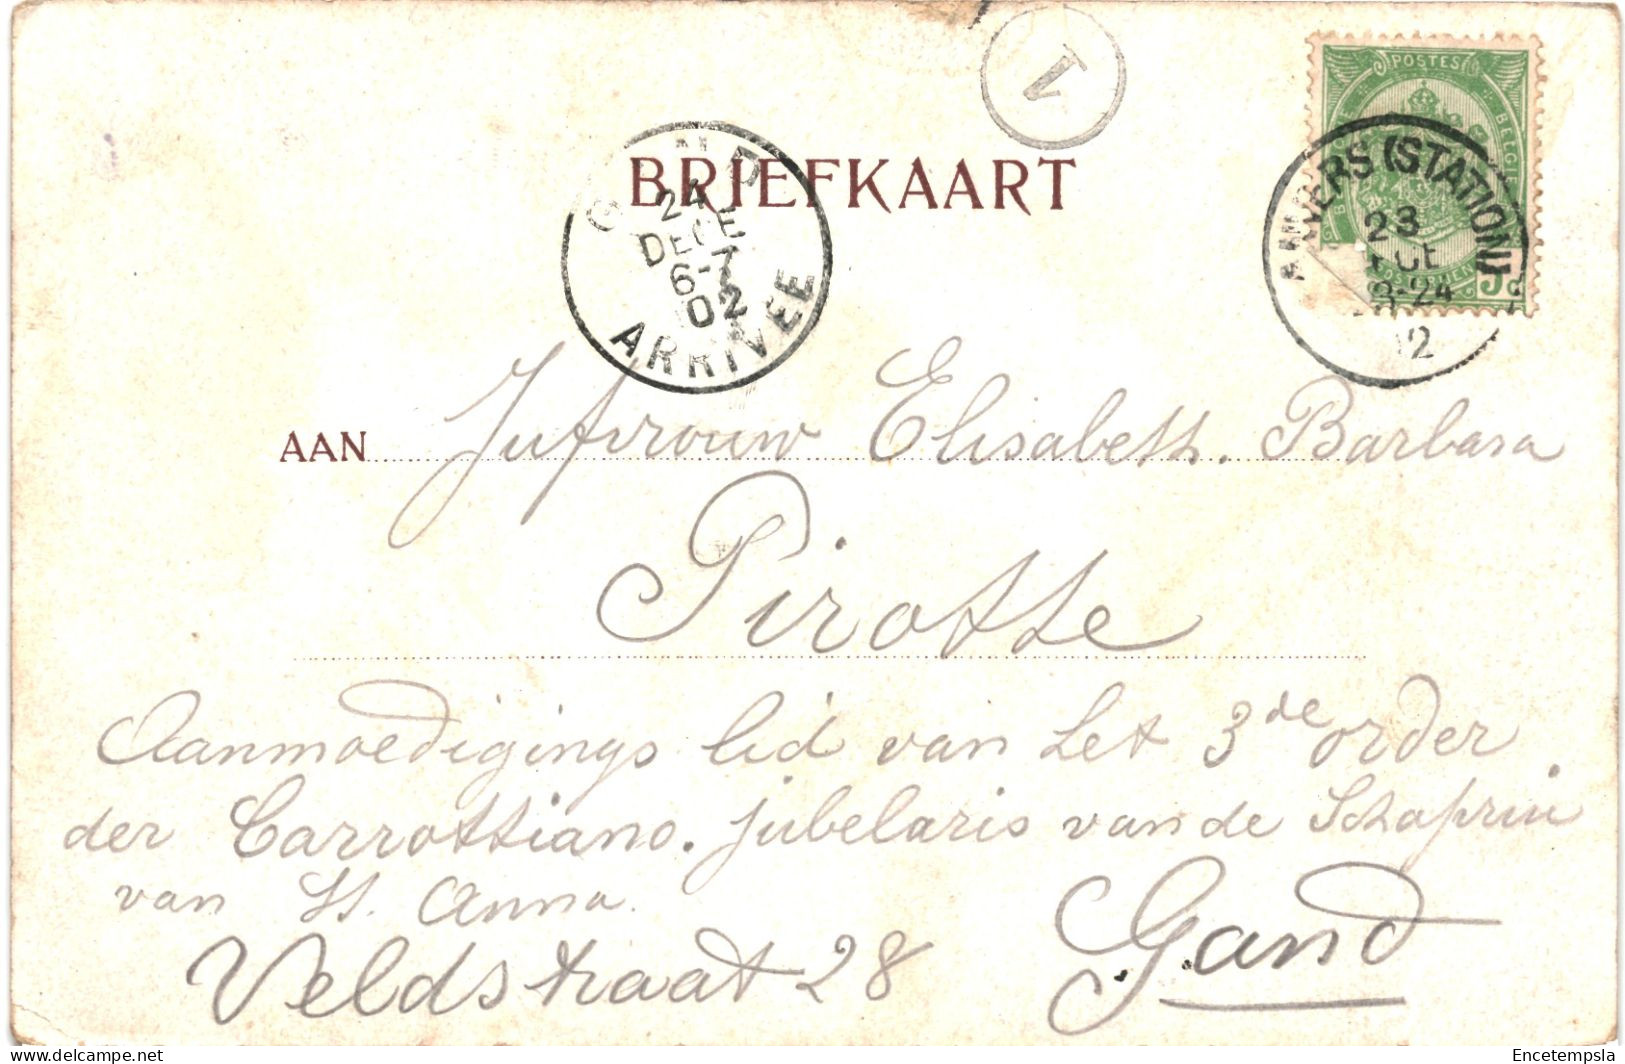 CPA Carte Postale Pays Bas  Scheveningen  Kuurhuis 1902 VM75587pk - Scheveningen